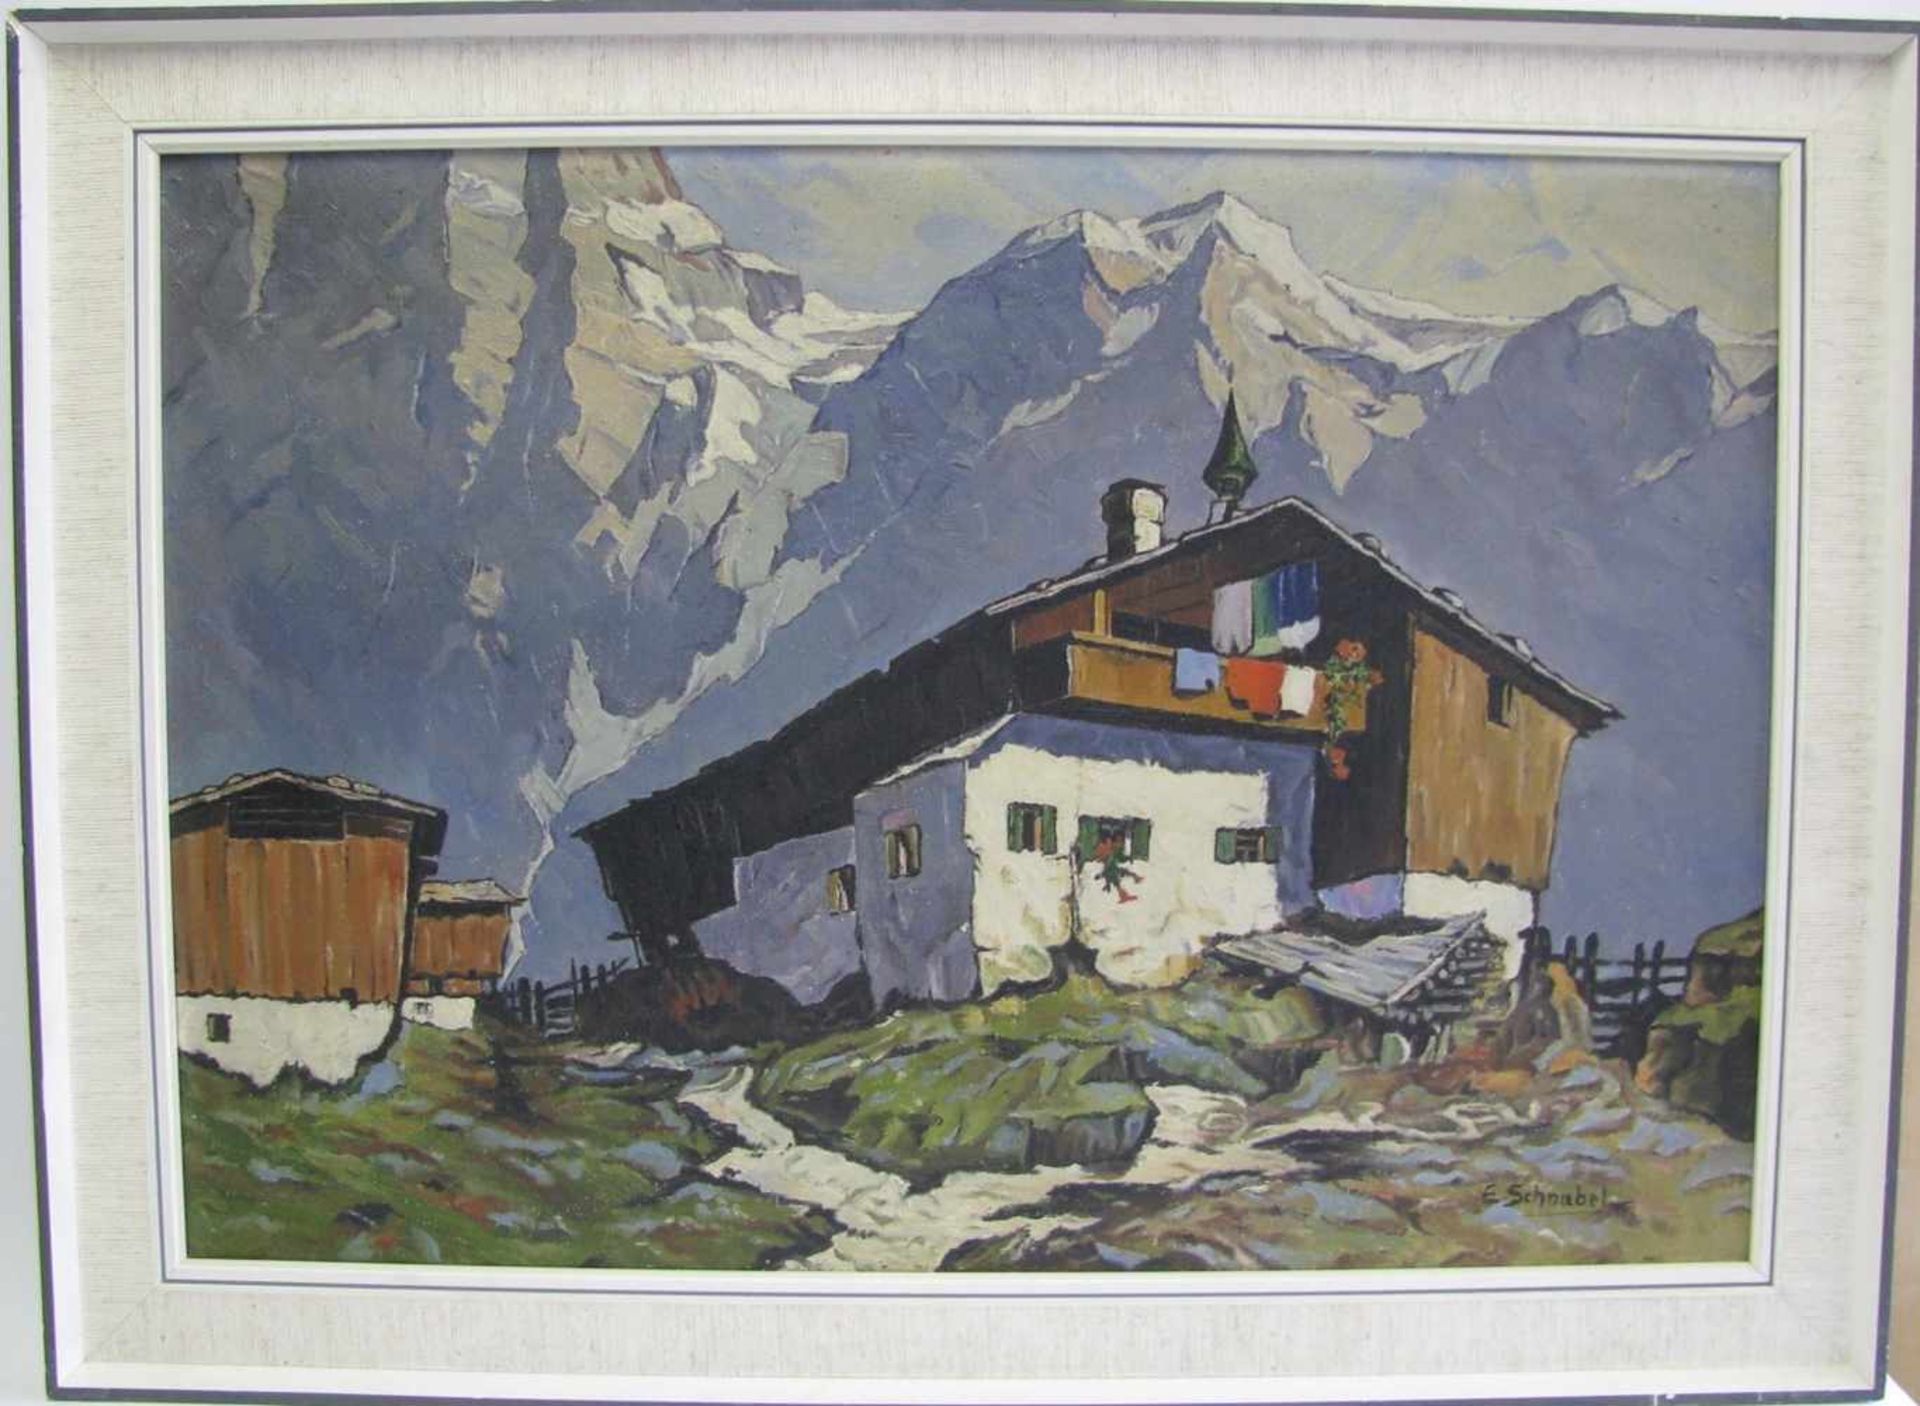 Schnabel, E., "Bauernhof im Gebirge", re.u.sign., Öl/Leinwand, 44 x 63,5 cm, R.